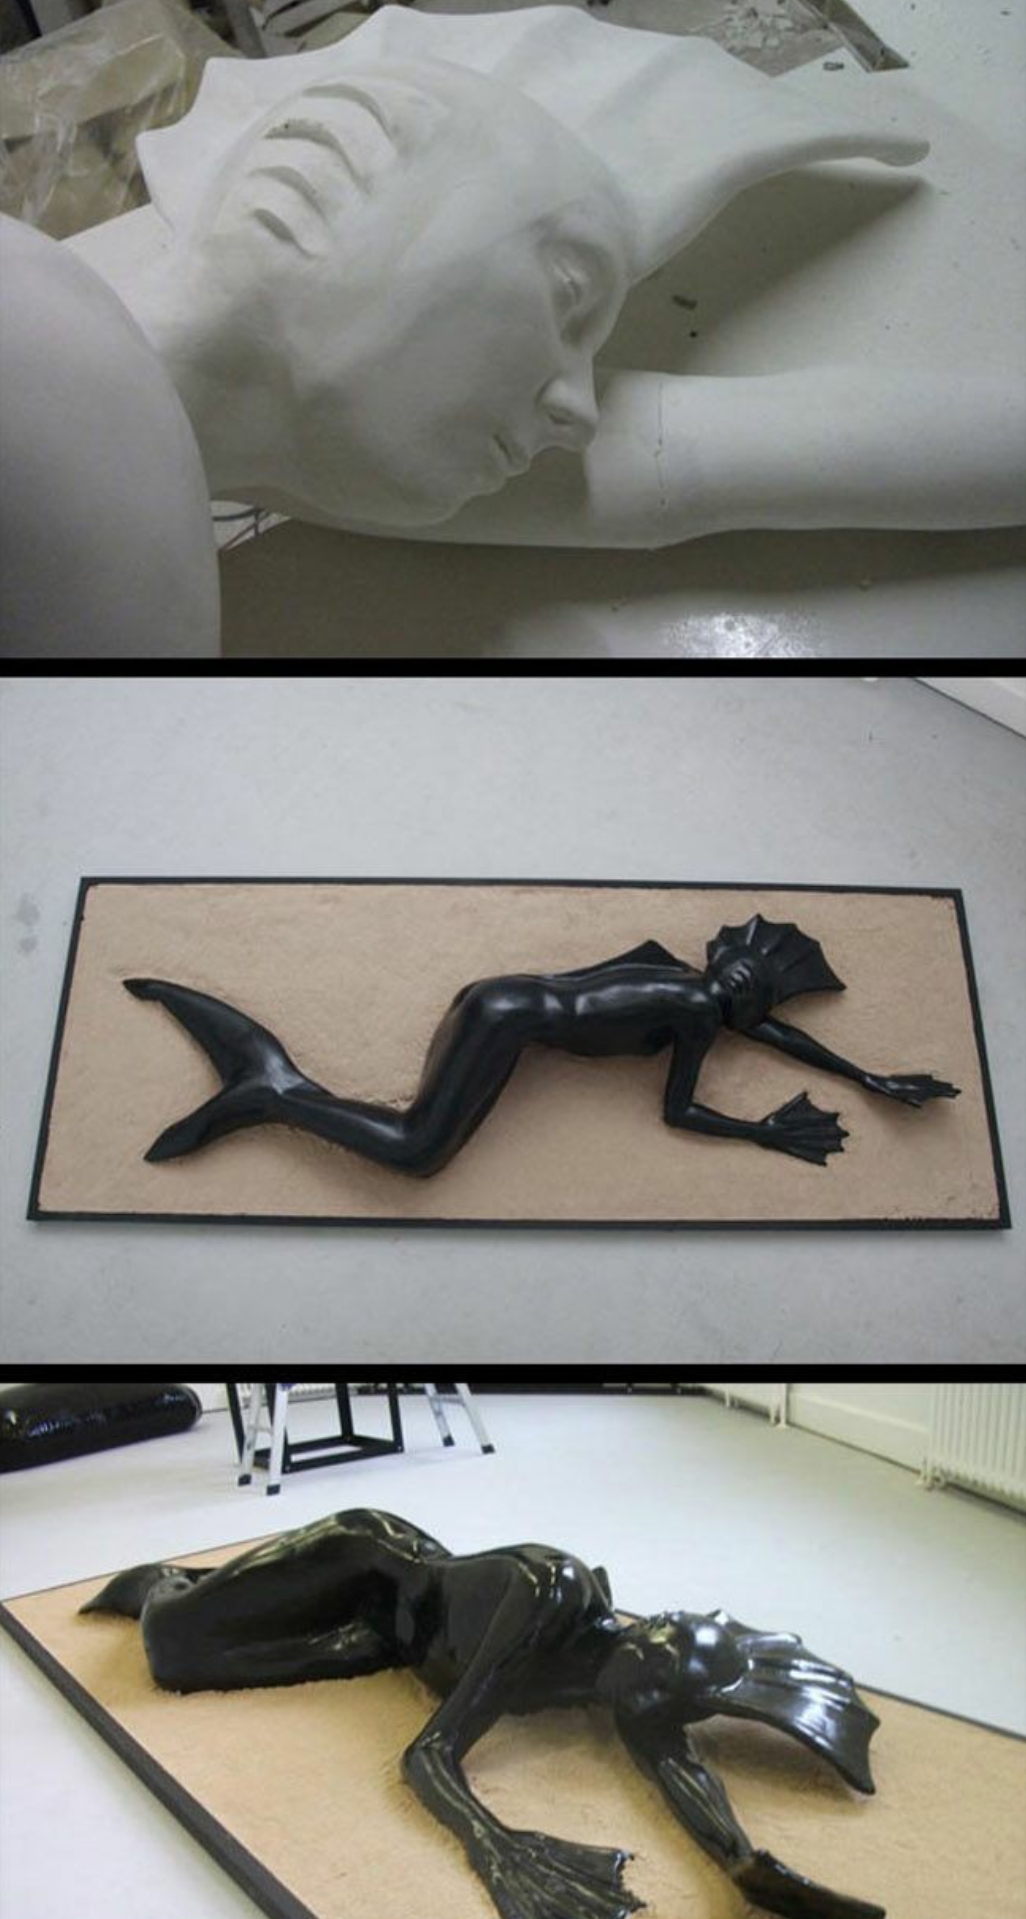 Creepy Guy Uses A Girl To Make A Very Weird Sculpture